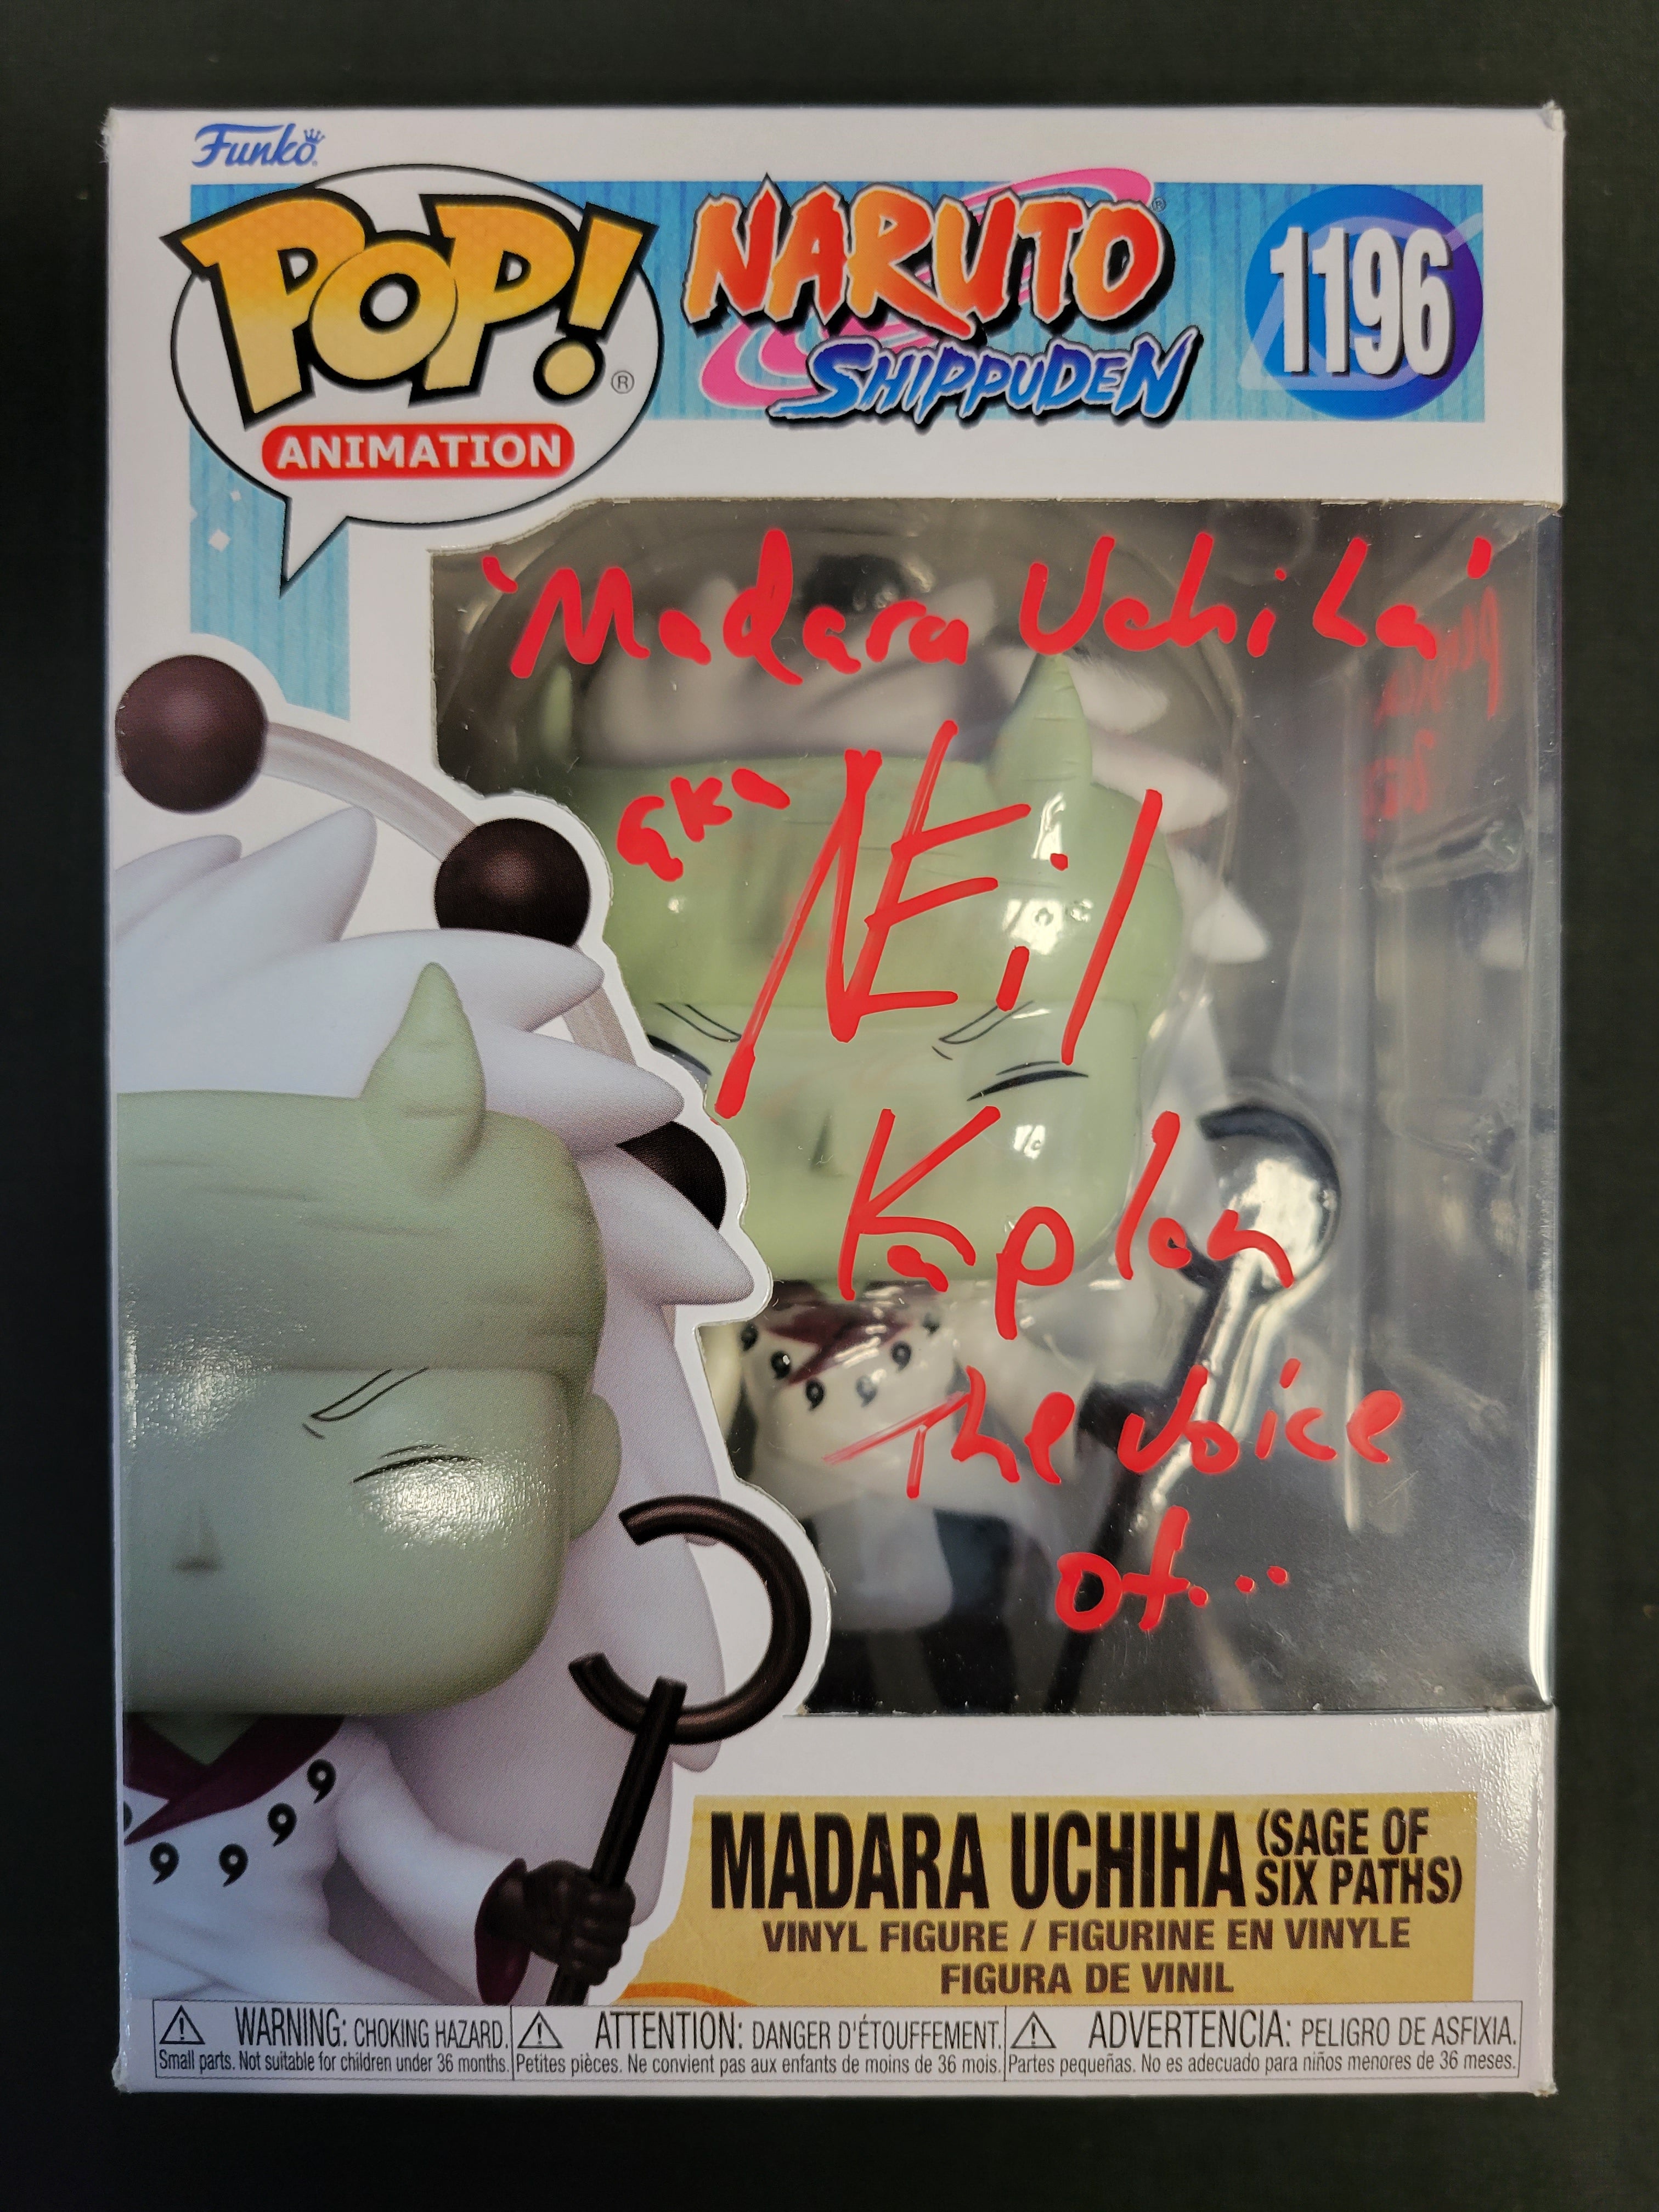 Funko Pop: #1196 Madara Uchiha From Naruto Signed By Neil Kaplan - JSA Cert 511